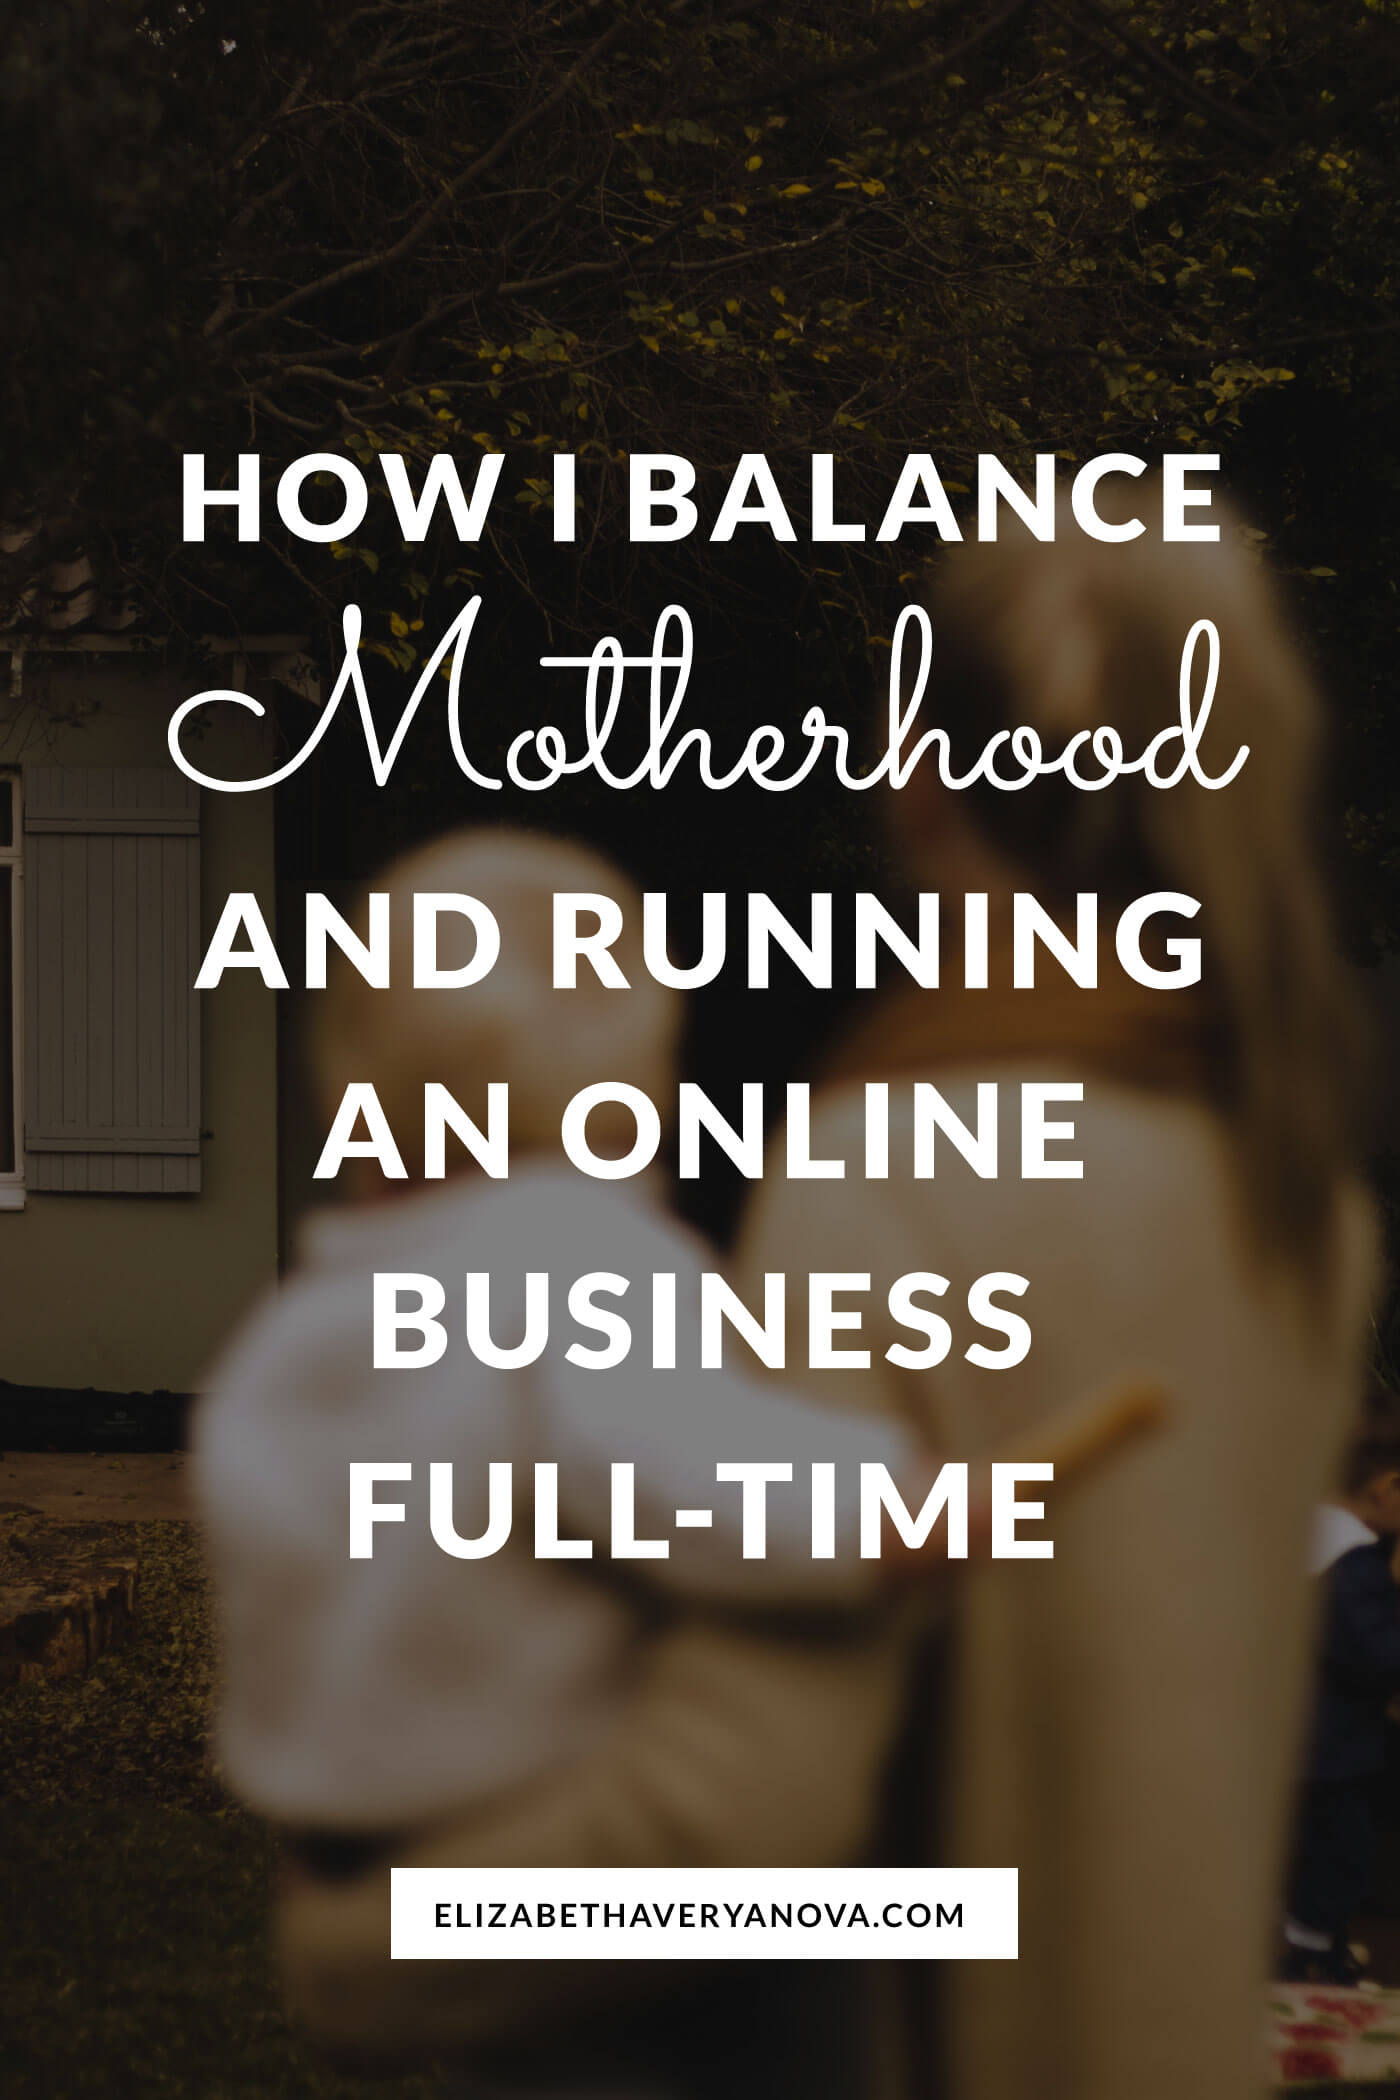 How I Balance Motherhood and Business